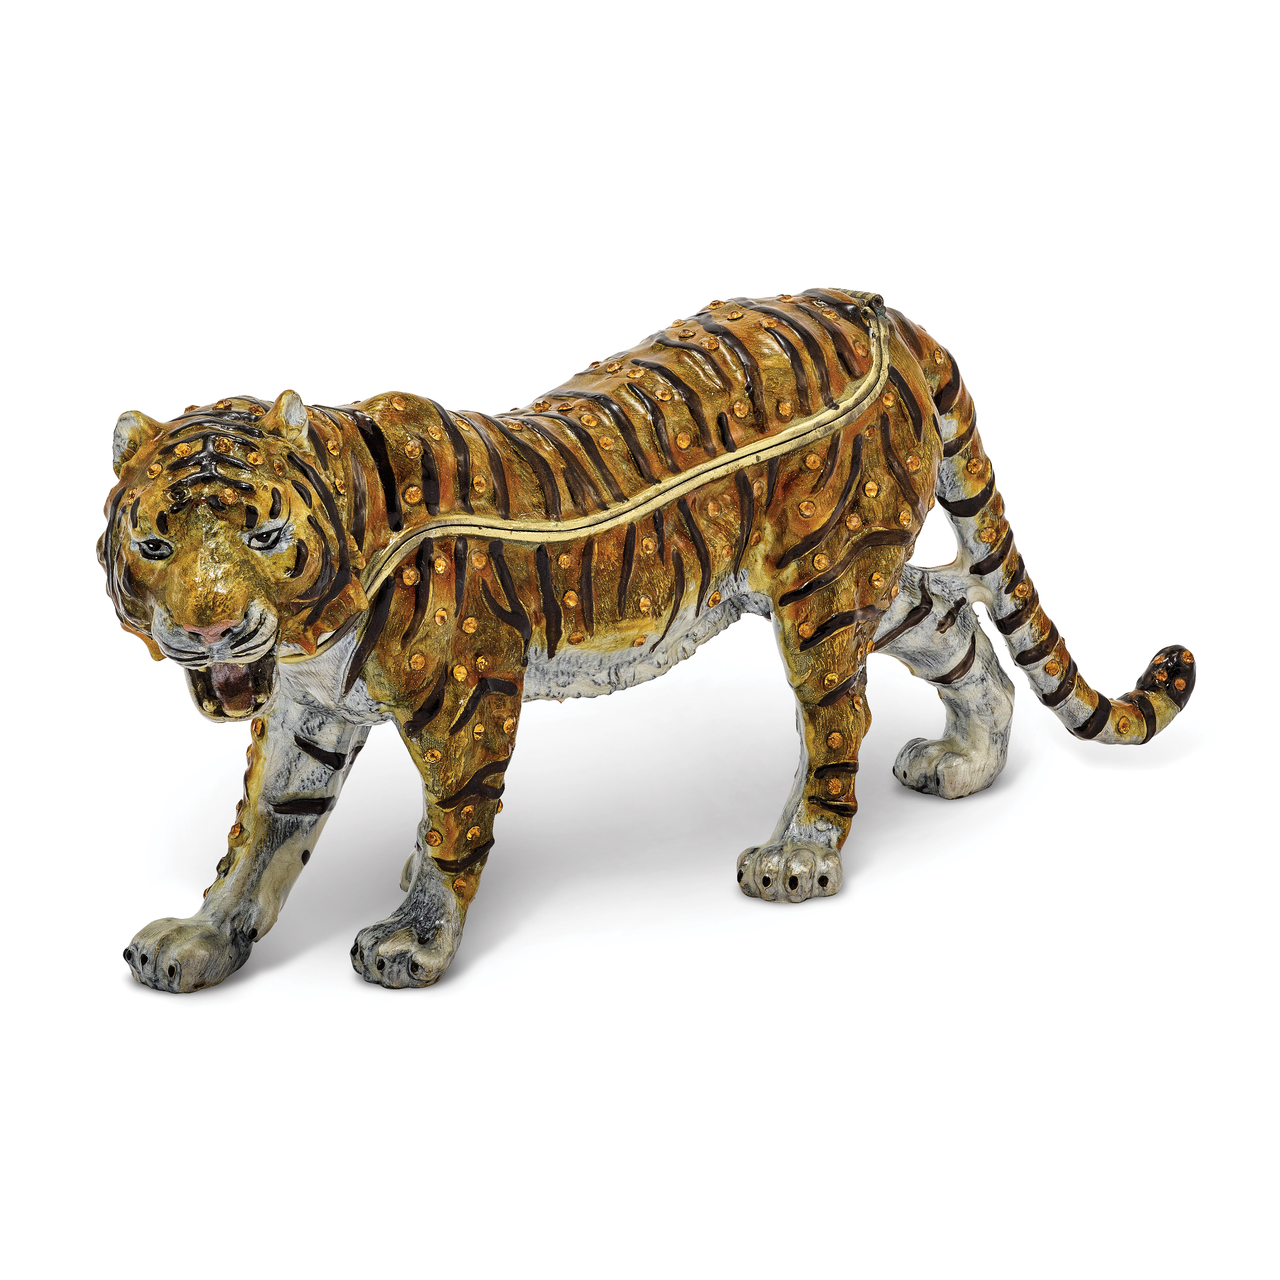 Large Bengal Tiger Trinket Box Enamel on Pewter by Jere